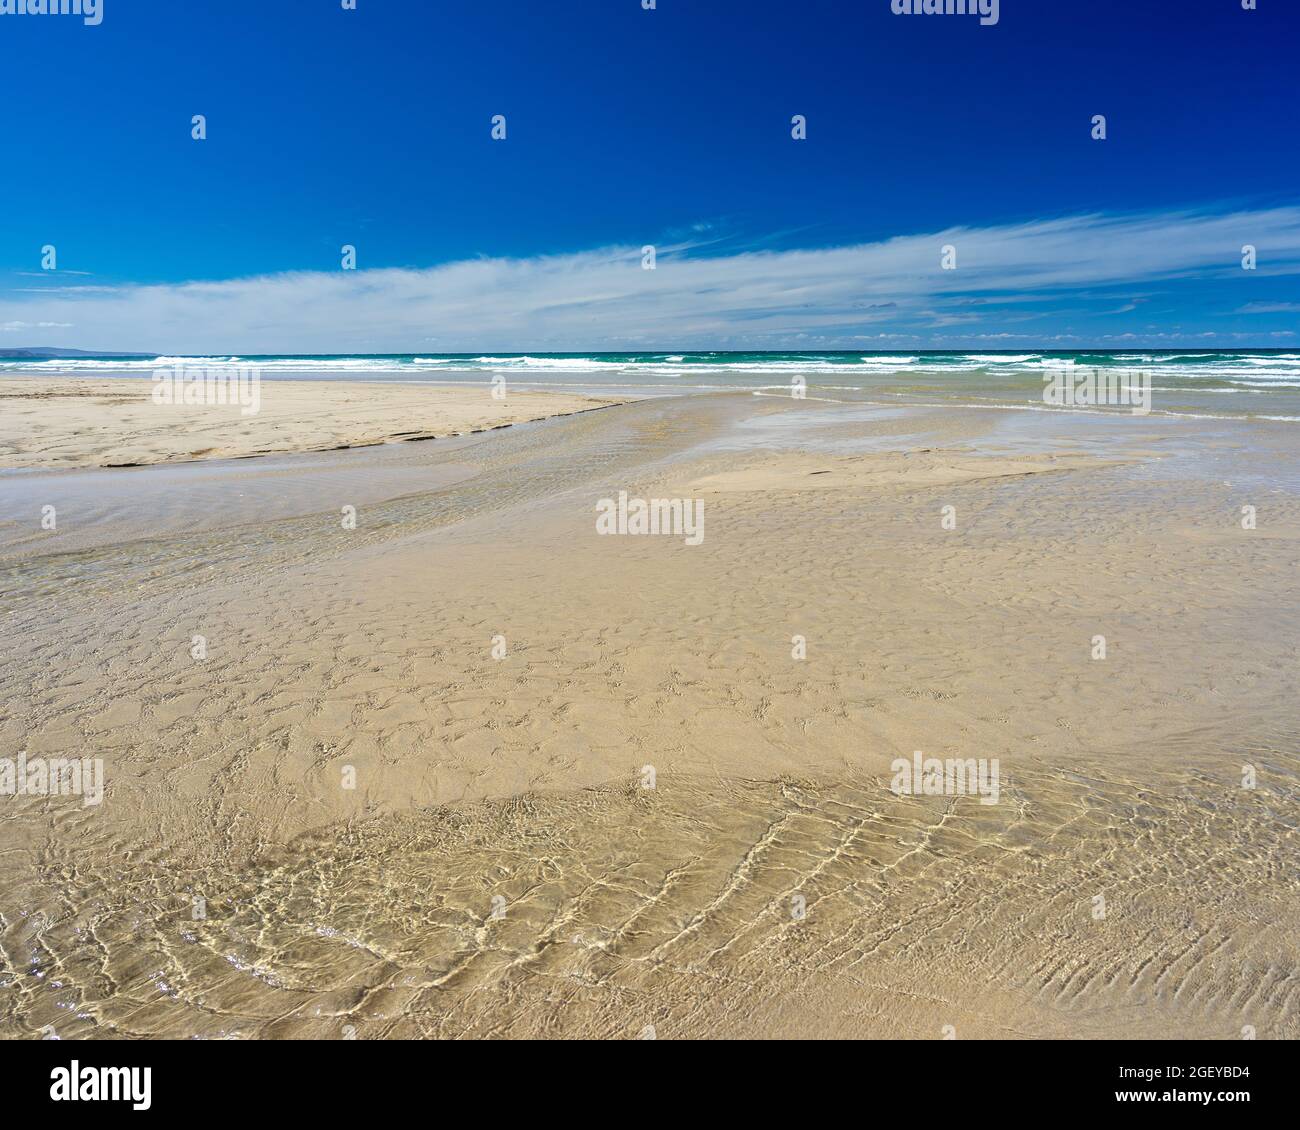 The beautiful golden sandy beach at Porthtowan Cornwall England UK Europe Stock Photo